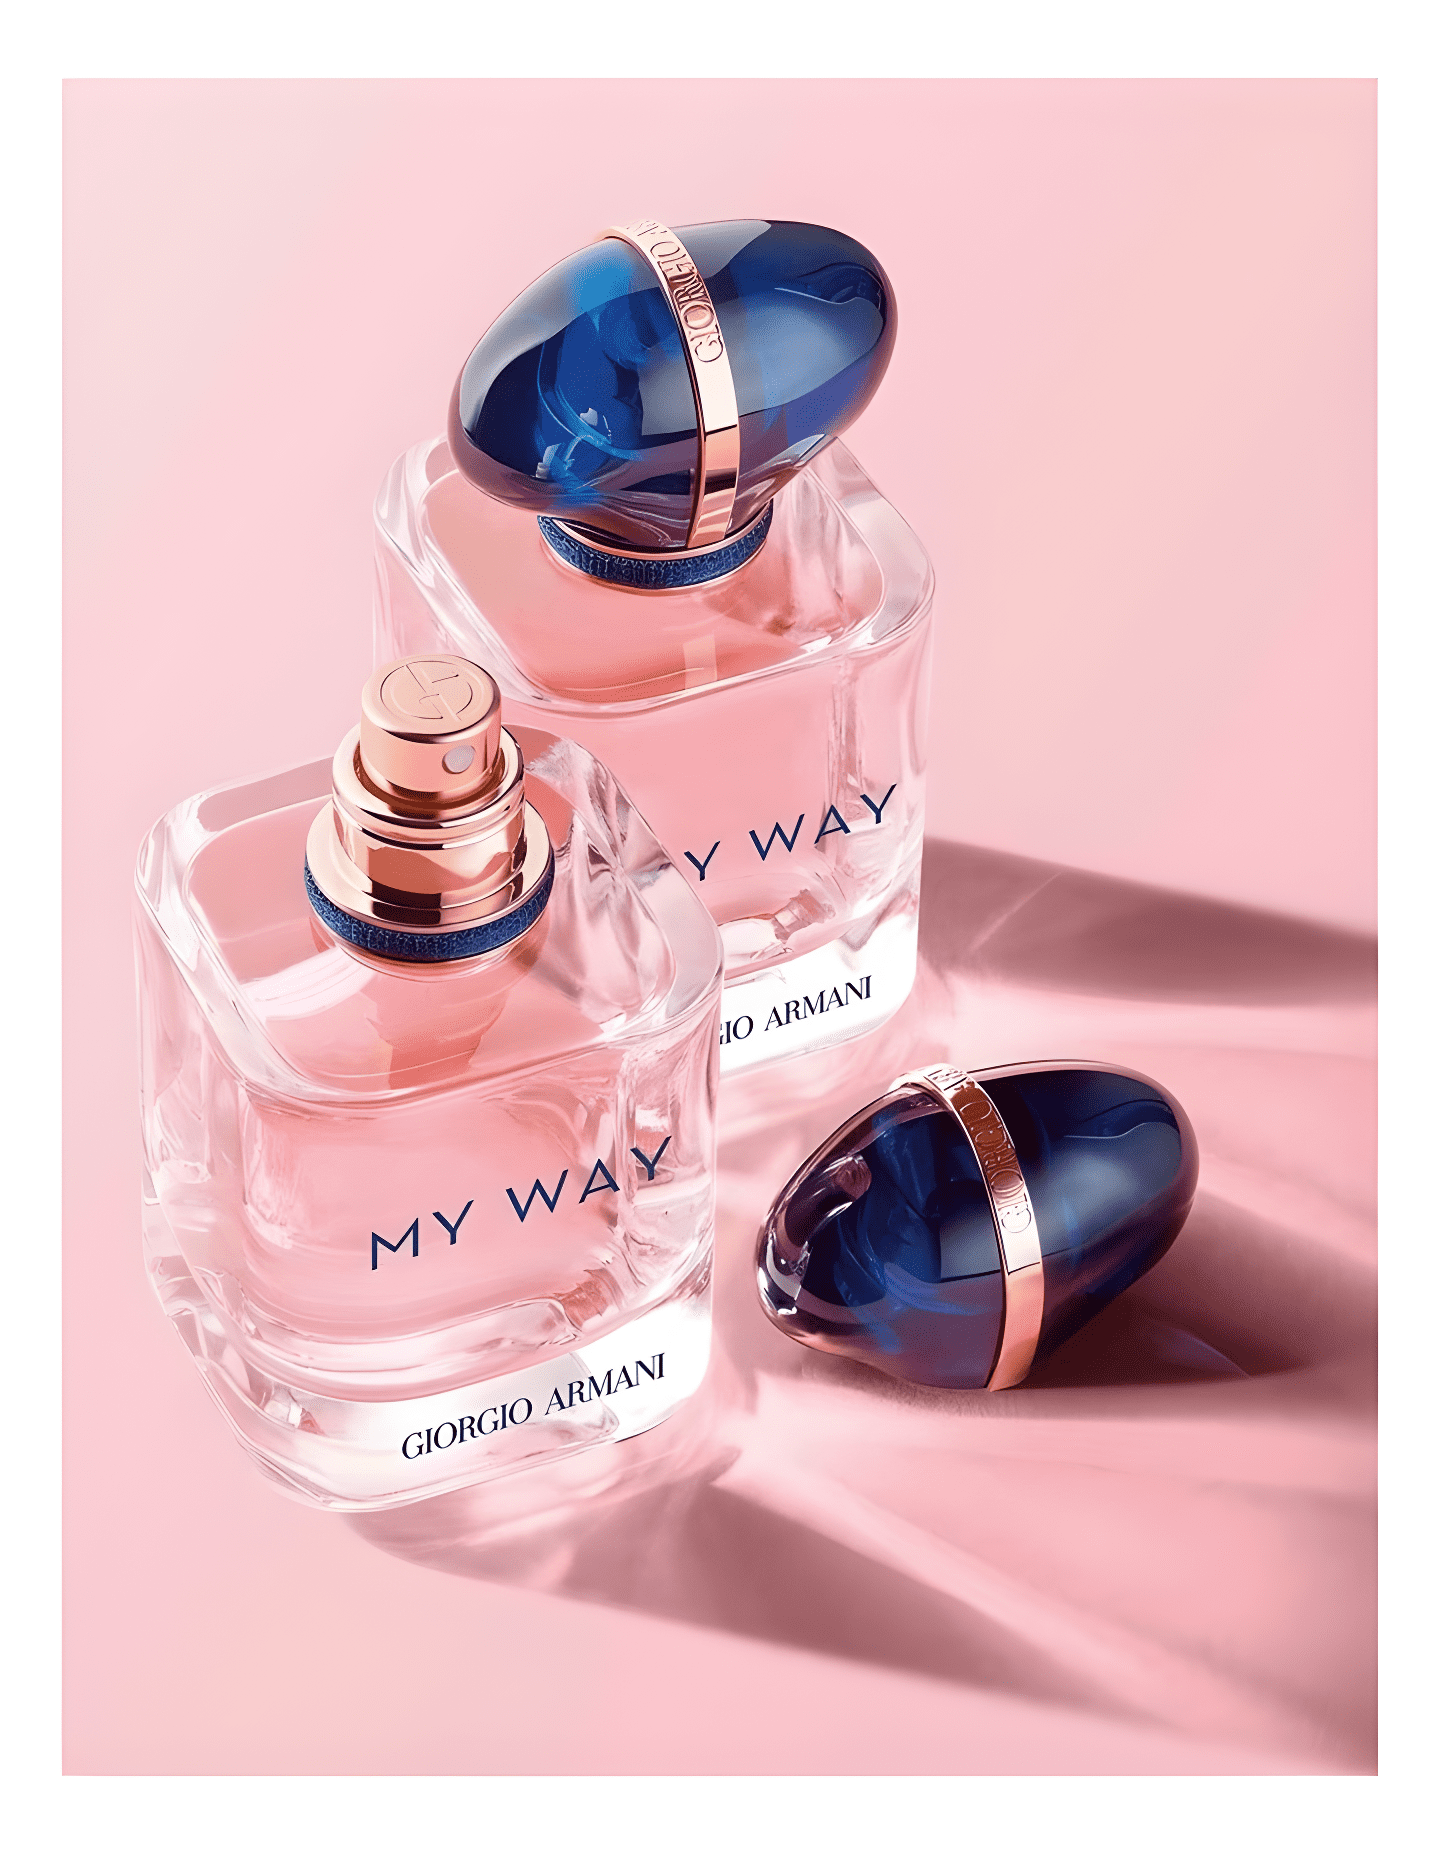 My Way by Giorgio Armani Eau de Parfum 0.5 oz Spray for Women